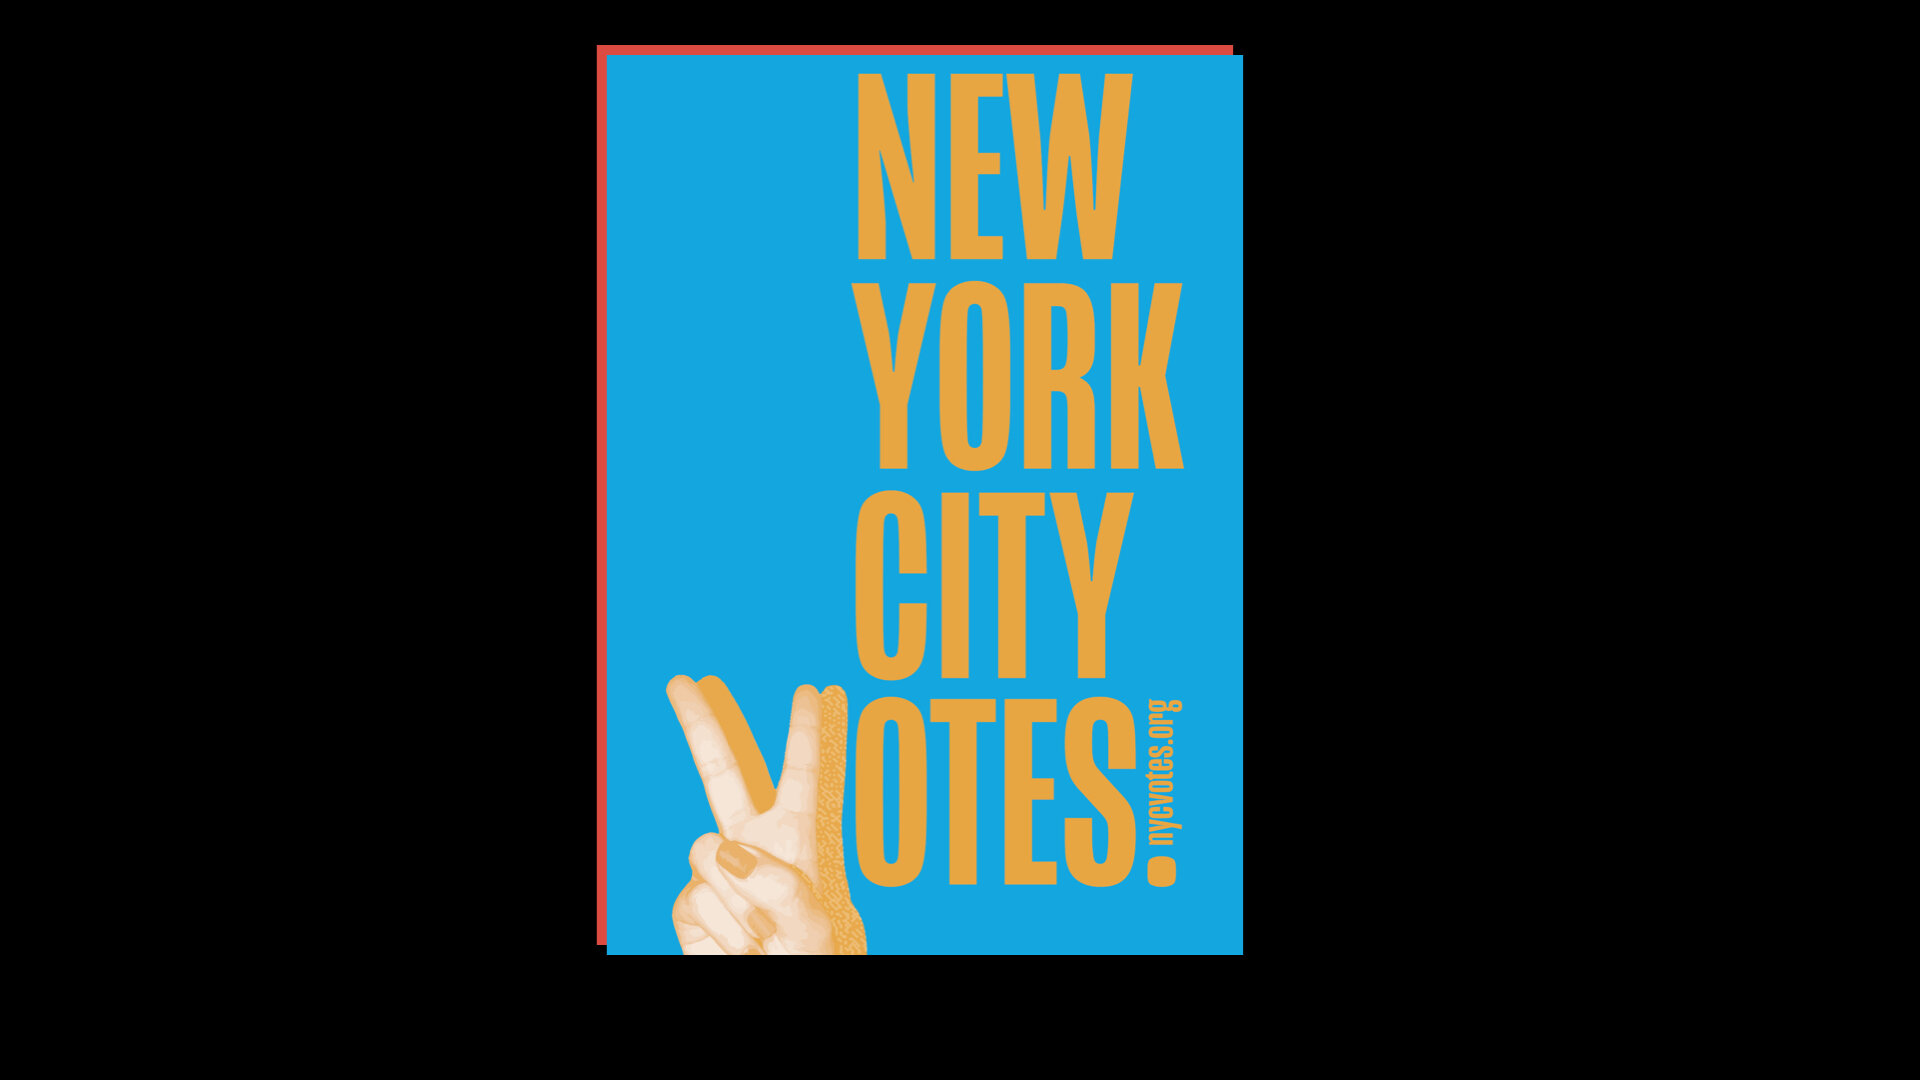 NYCVotes_Final_Presentation.009.jpeg